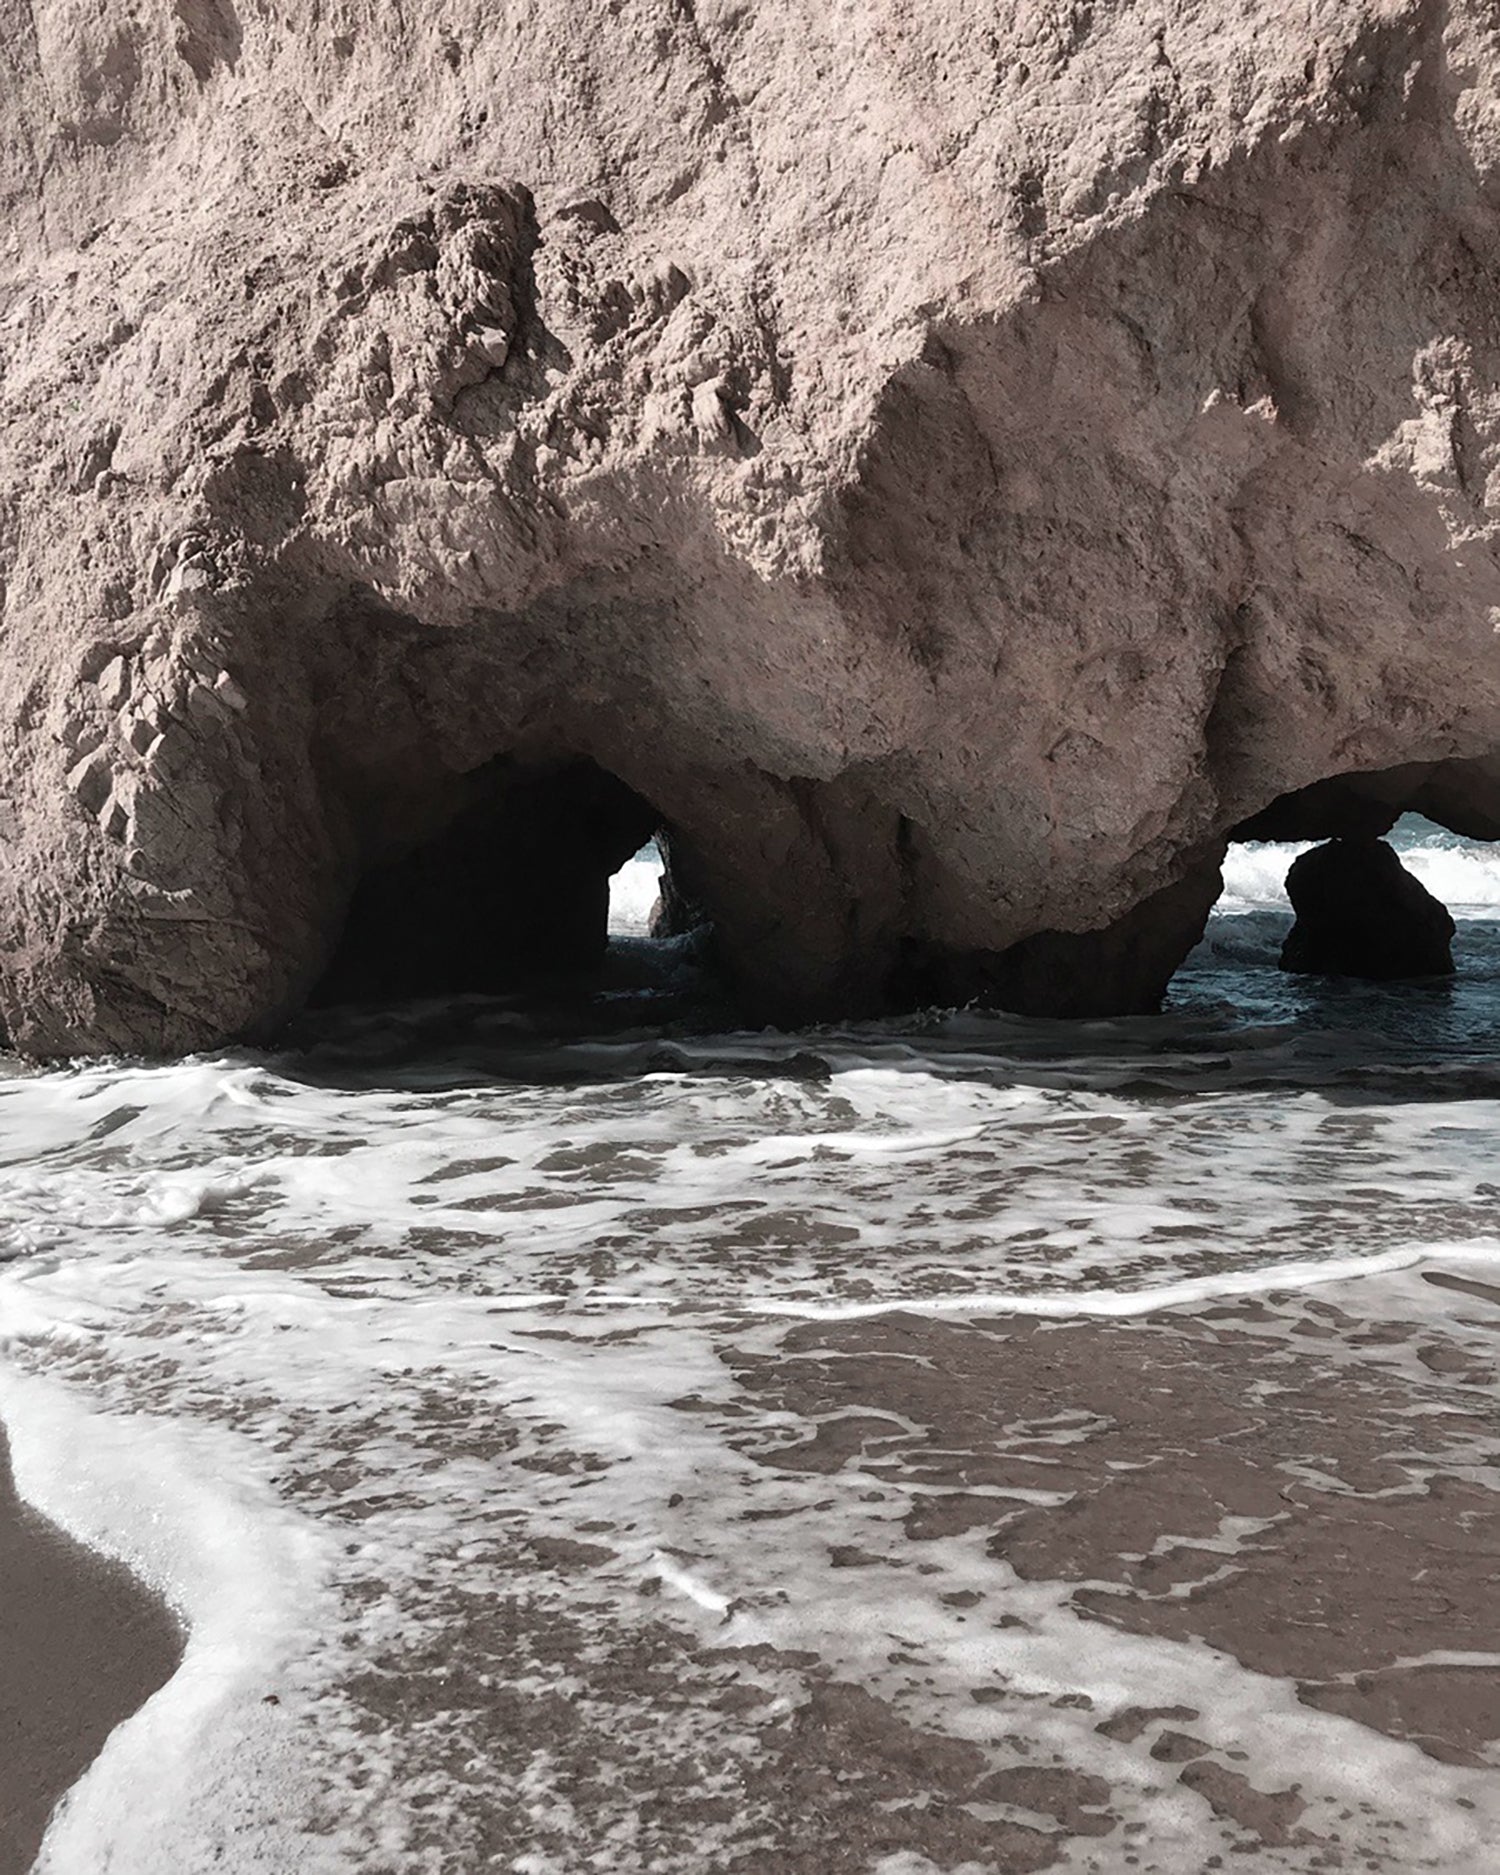 el matador beach cave in mailbu california. california lifestyle at its beat.